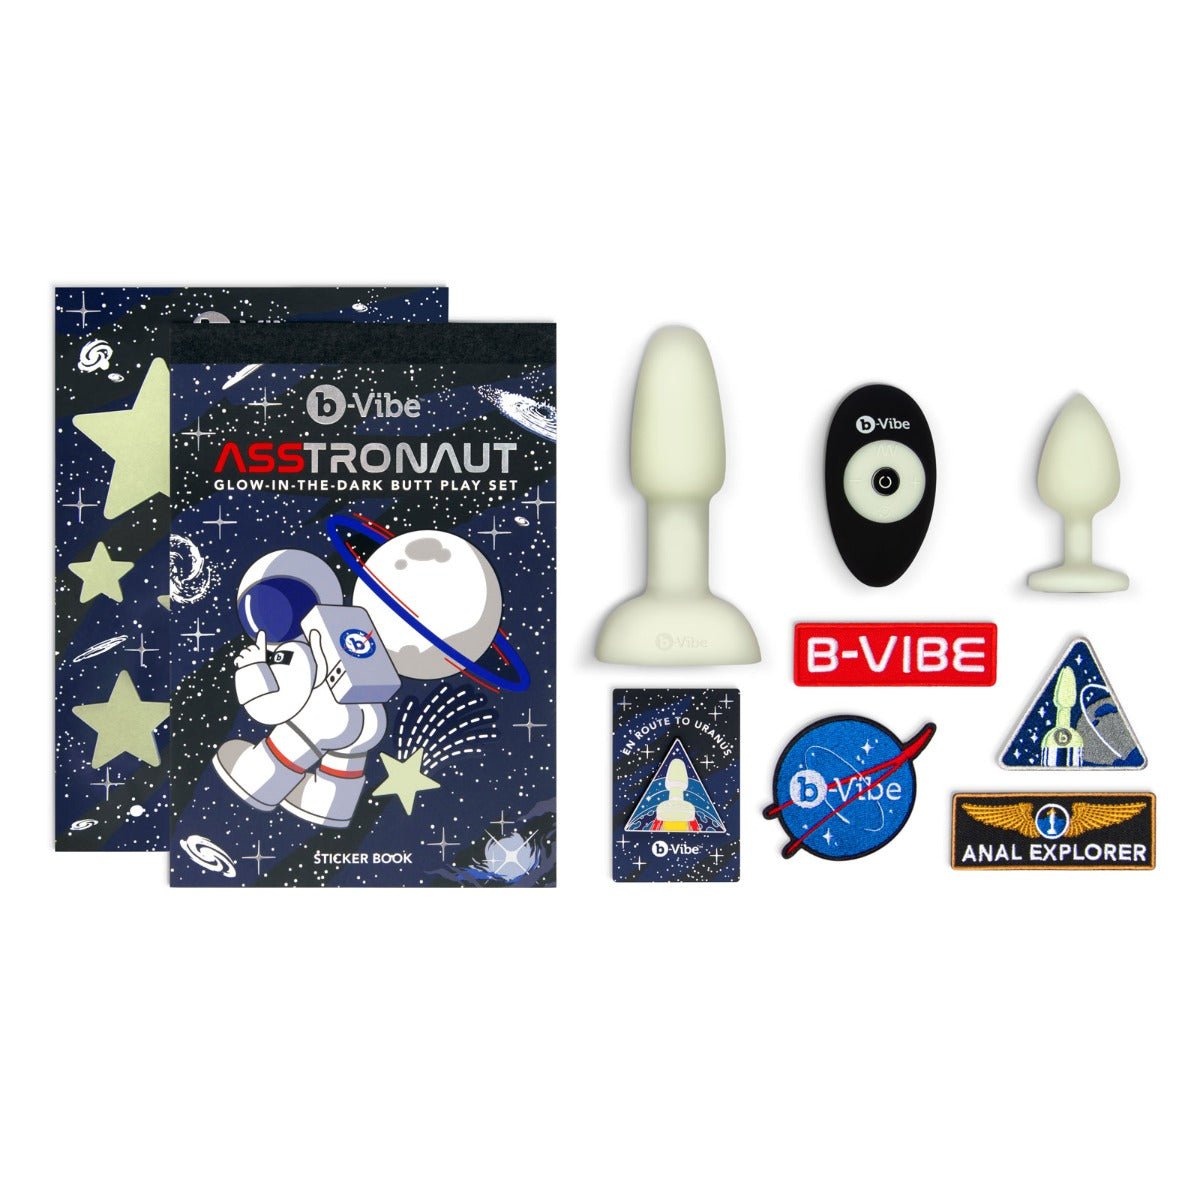 Sex Toy Kits B-Vibe Asstronaut Glow-In-The-Dark Butt Play Set   